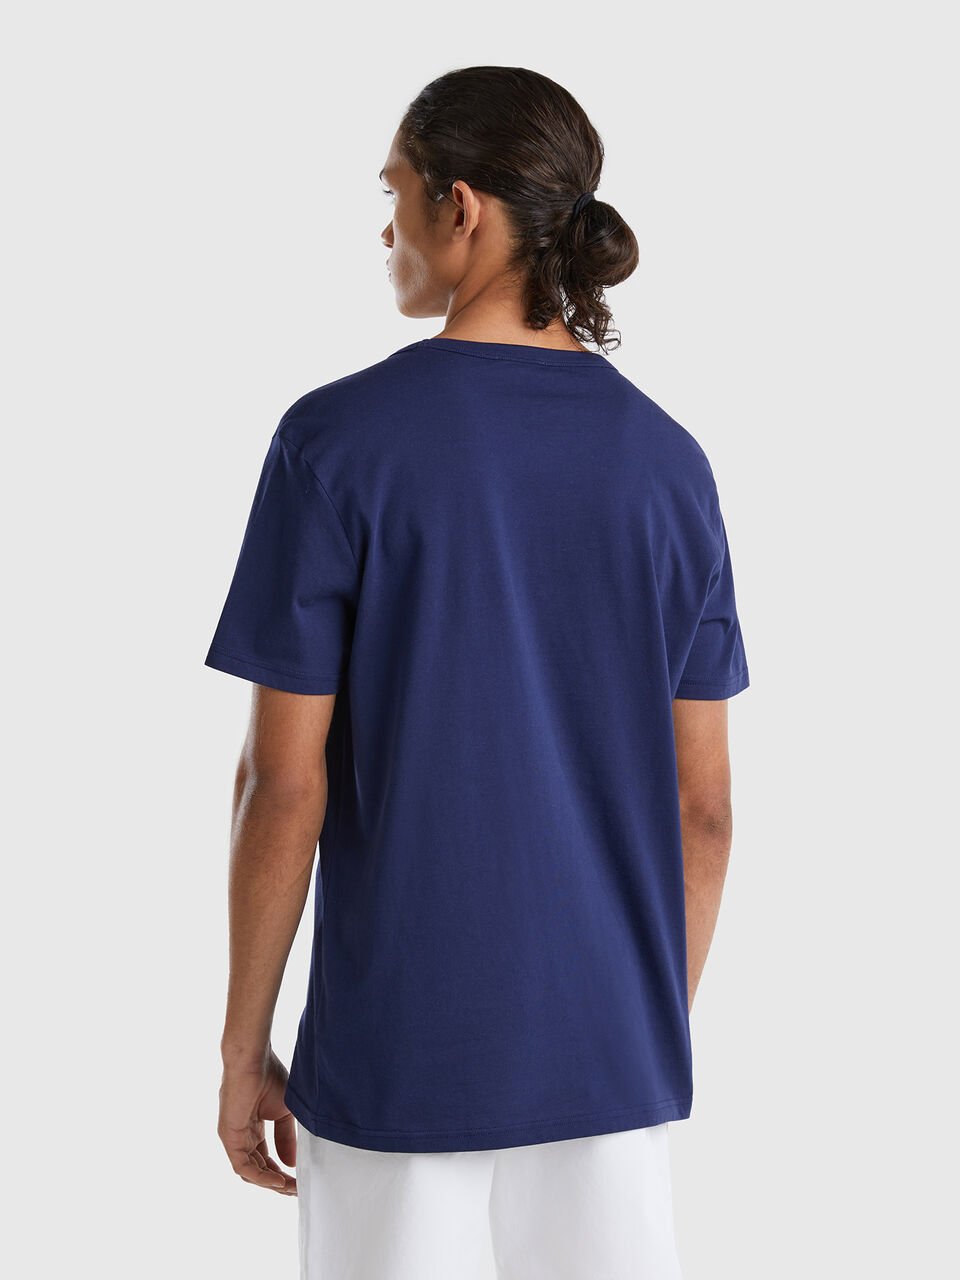 T-shirt in organic cotton with logo print, Blue - Benetton